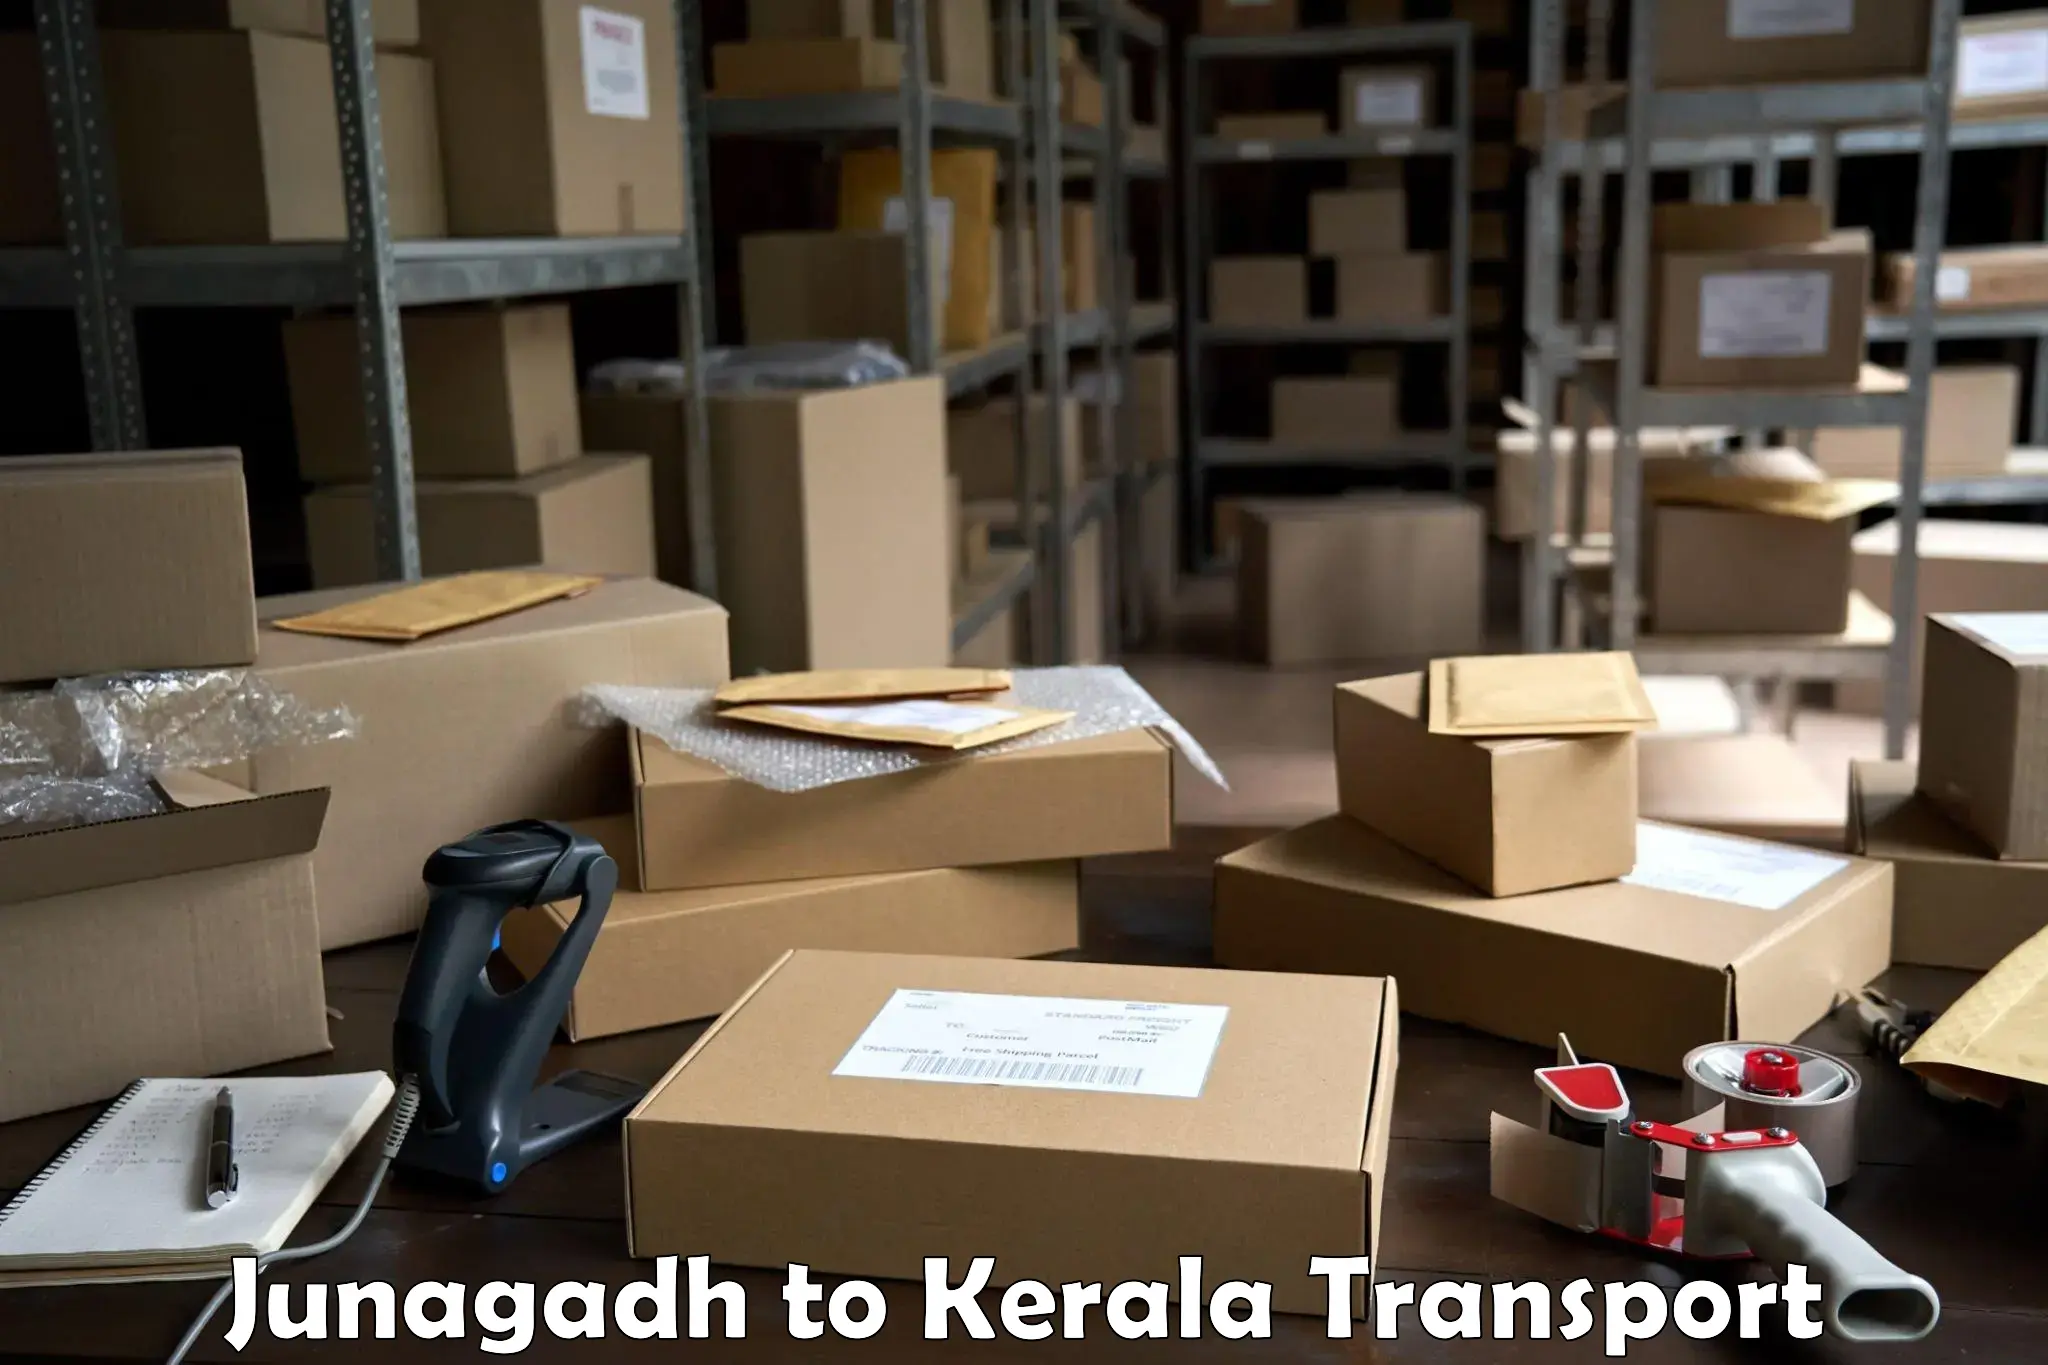 Daily parcel service transport Junagadh to Cochin Port Kochi